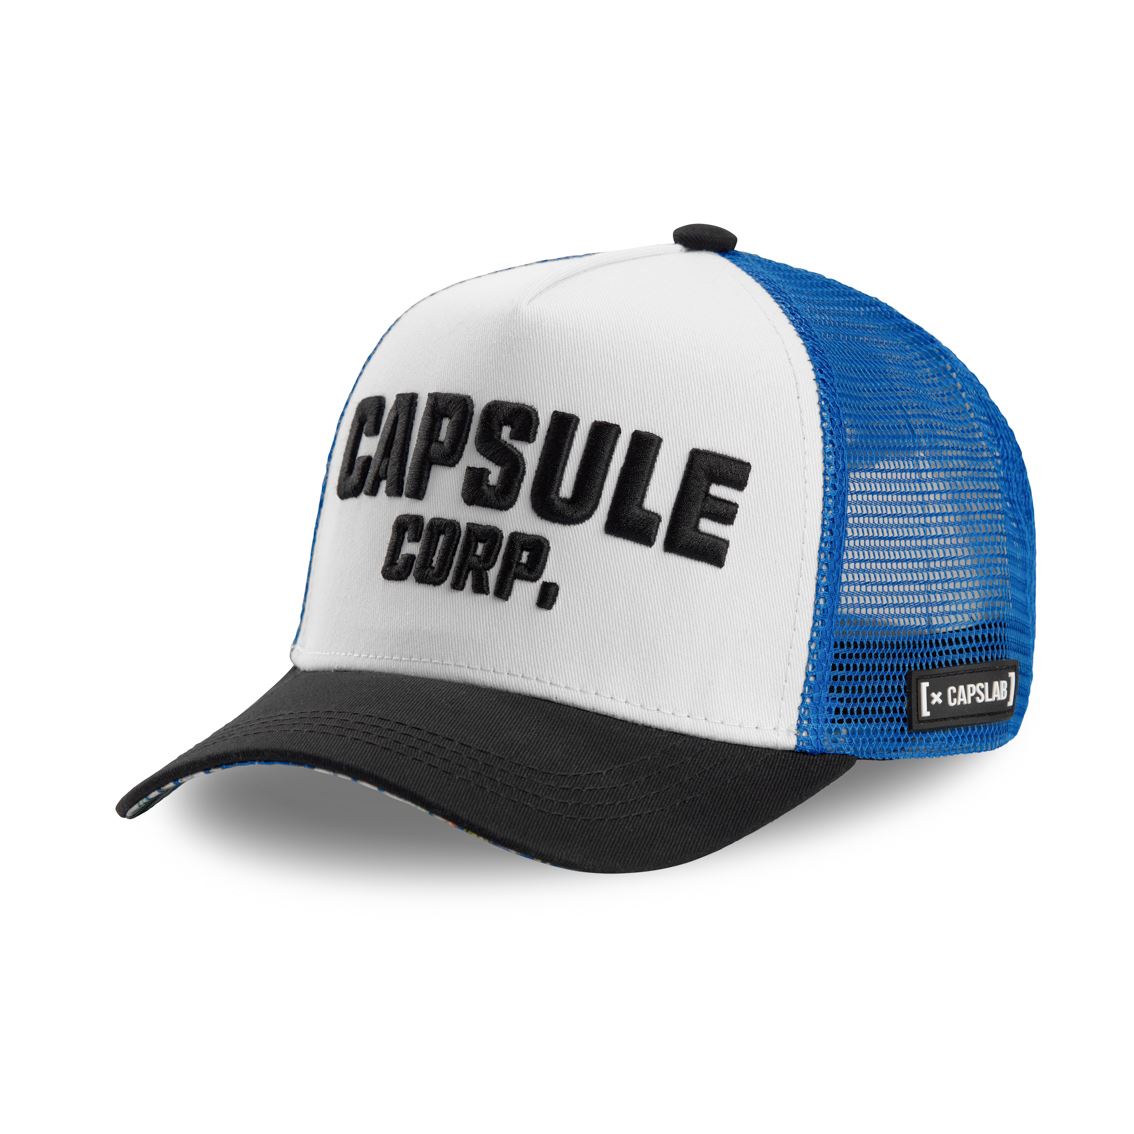 Capsule Corp. Dragon Ball Z White Black Blue Trucker Cap Capslab